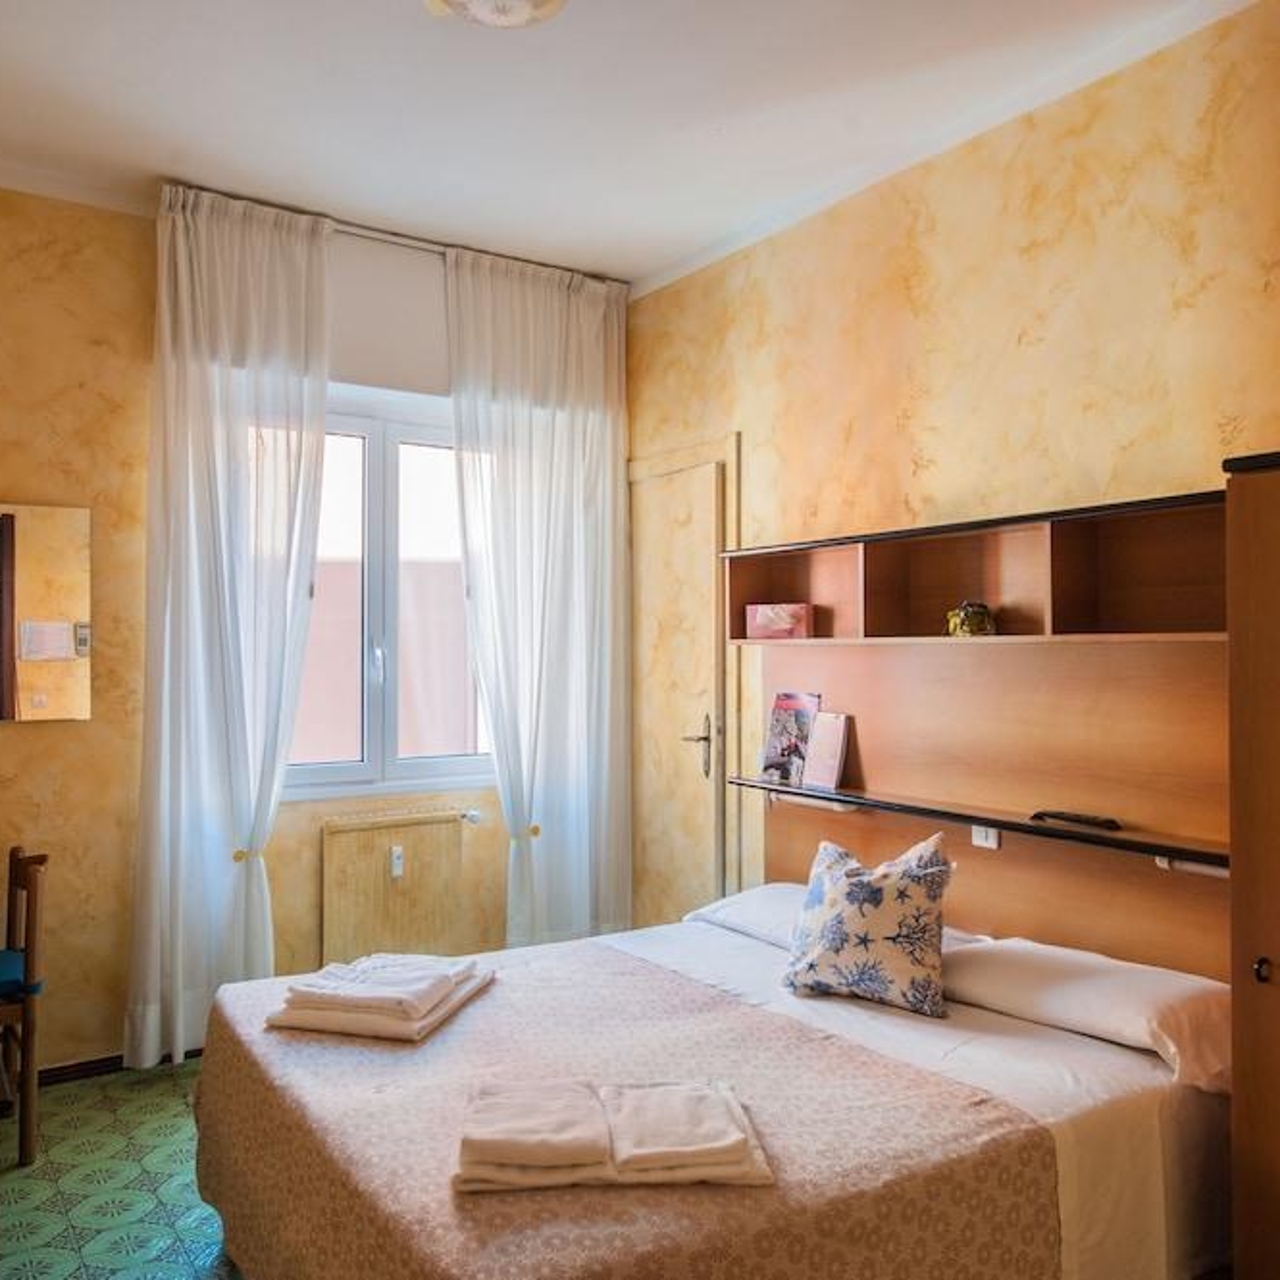 Hotel Albergo stella di mare - Lavagna at HRS with free services